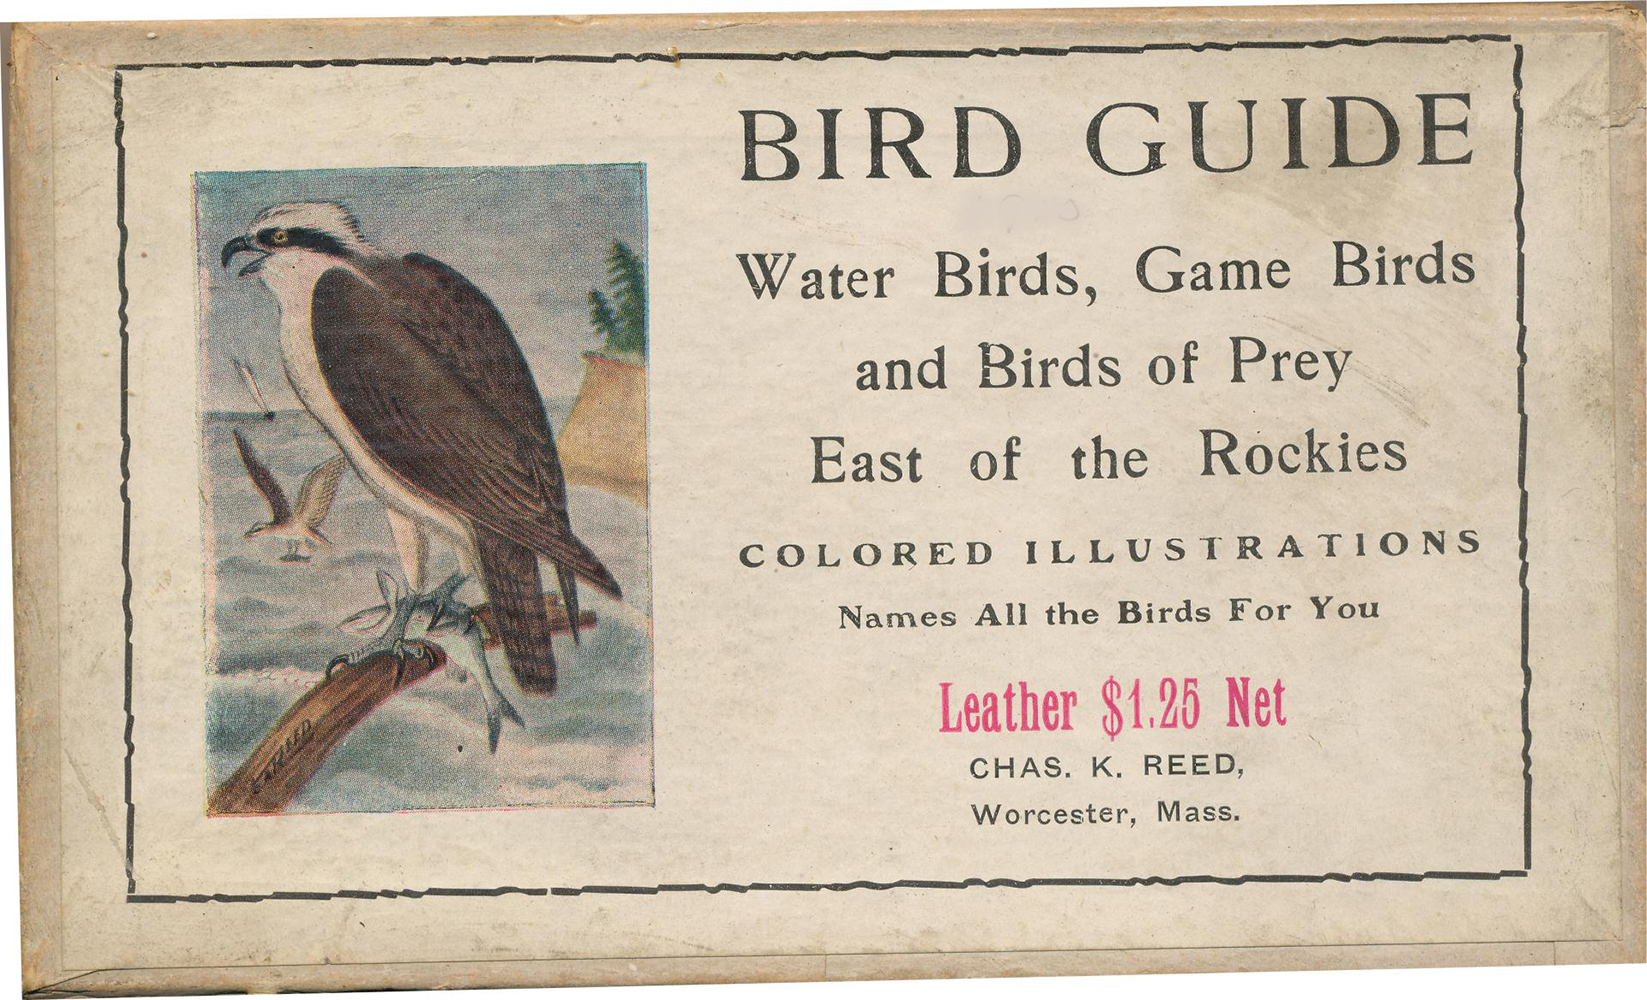 Box-bird-guide